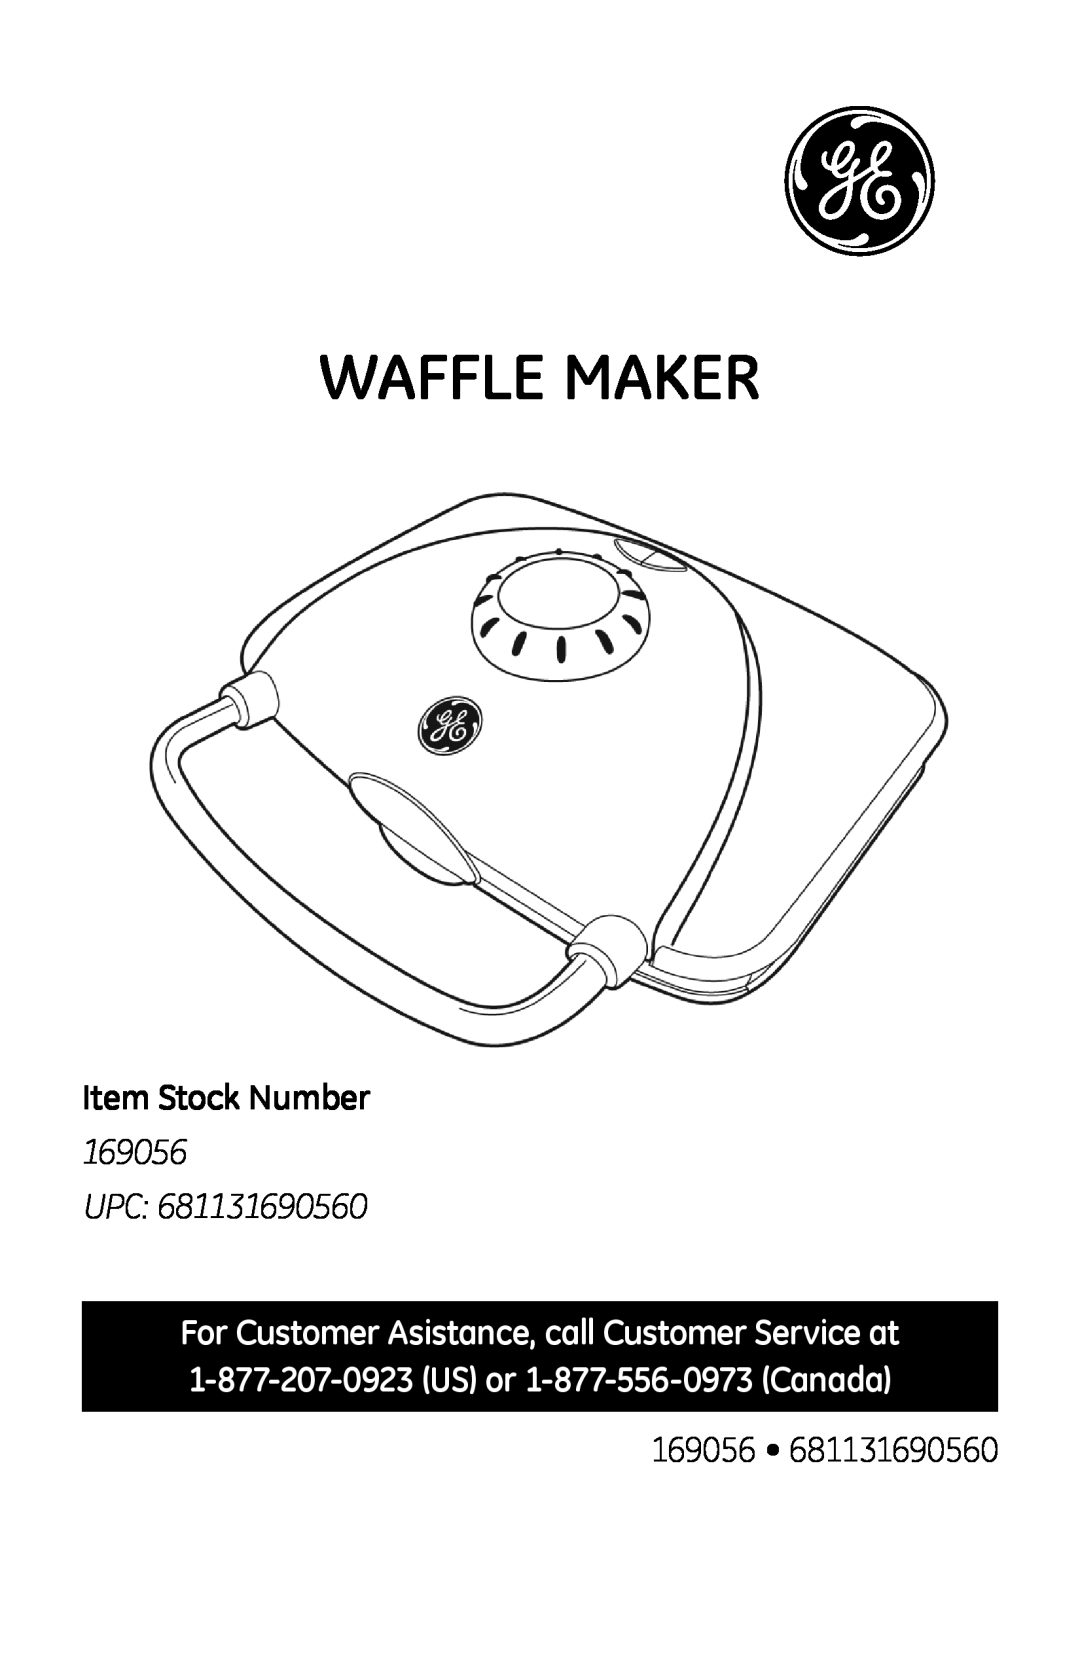 GE 681131690560, 169076 manual Waffle Maker, Item Stock Number, 169056 UPC 